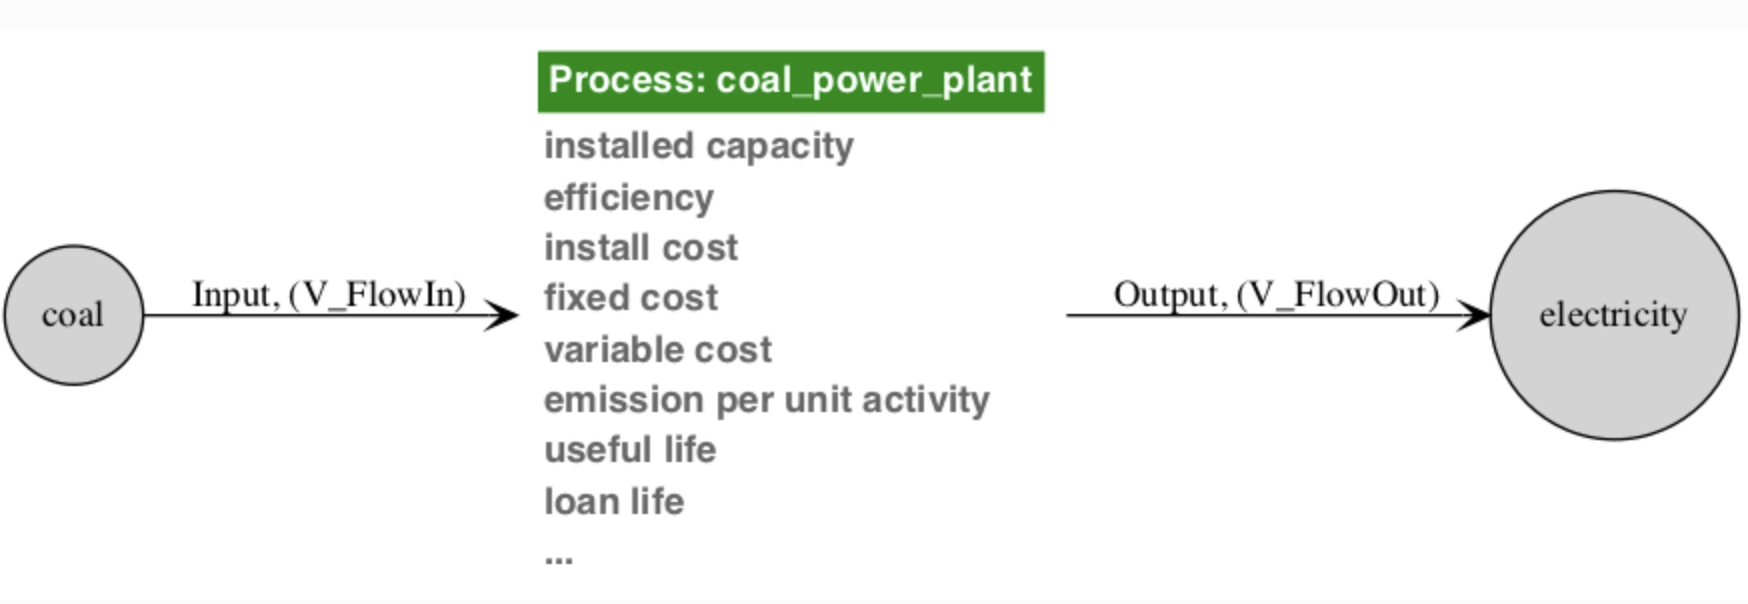 _images/coal_process.png